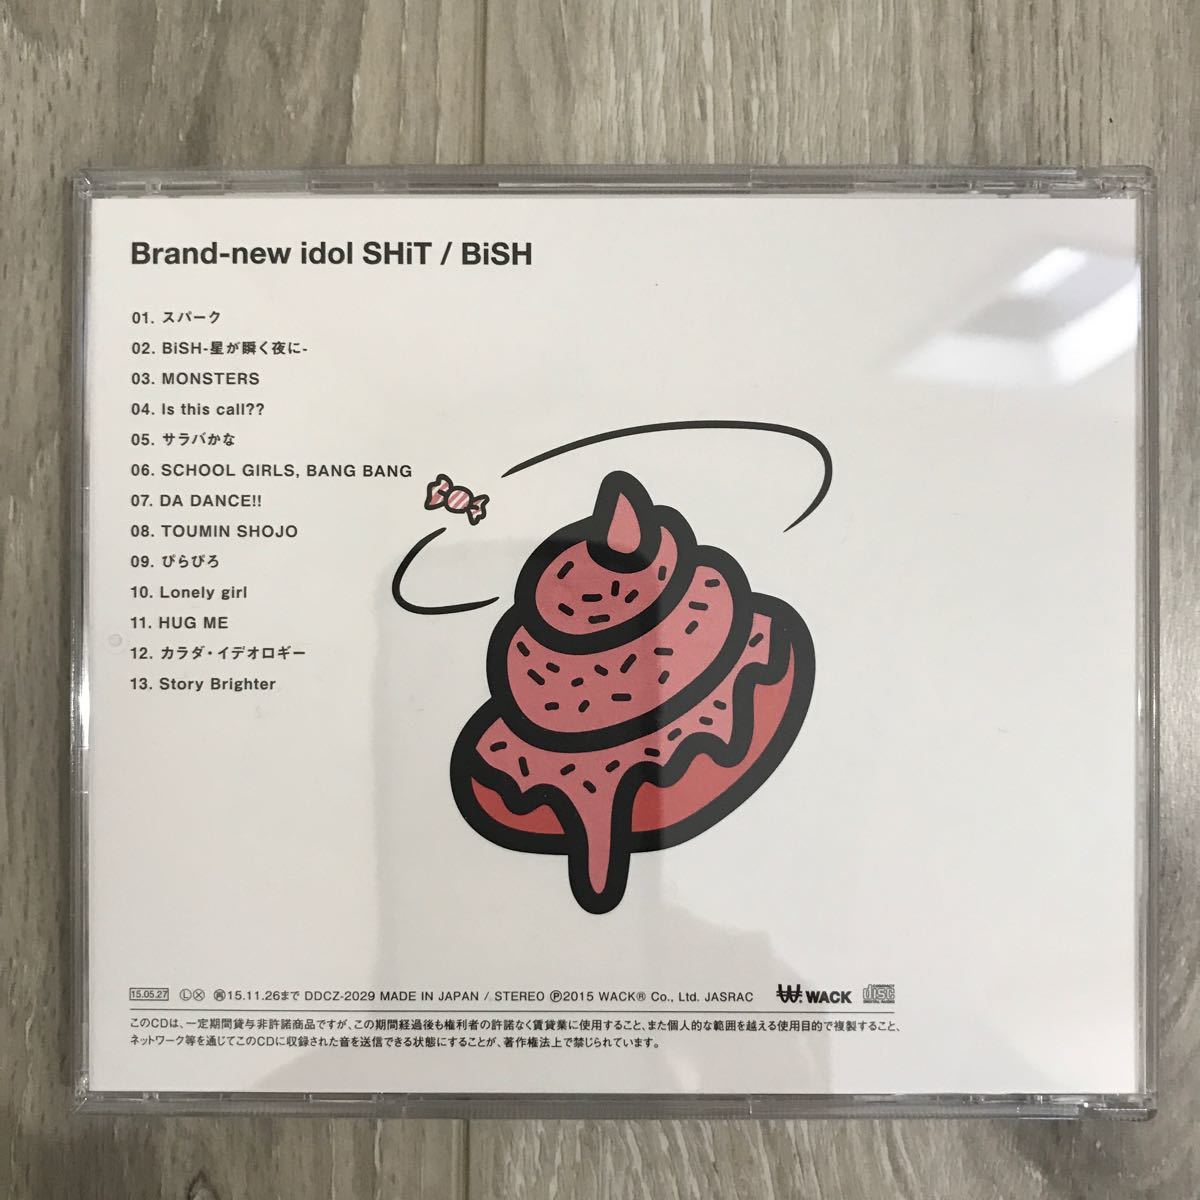 Brand new idol shit 限定ポスター - telepia.jp